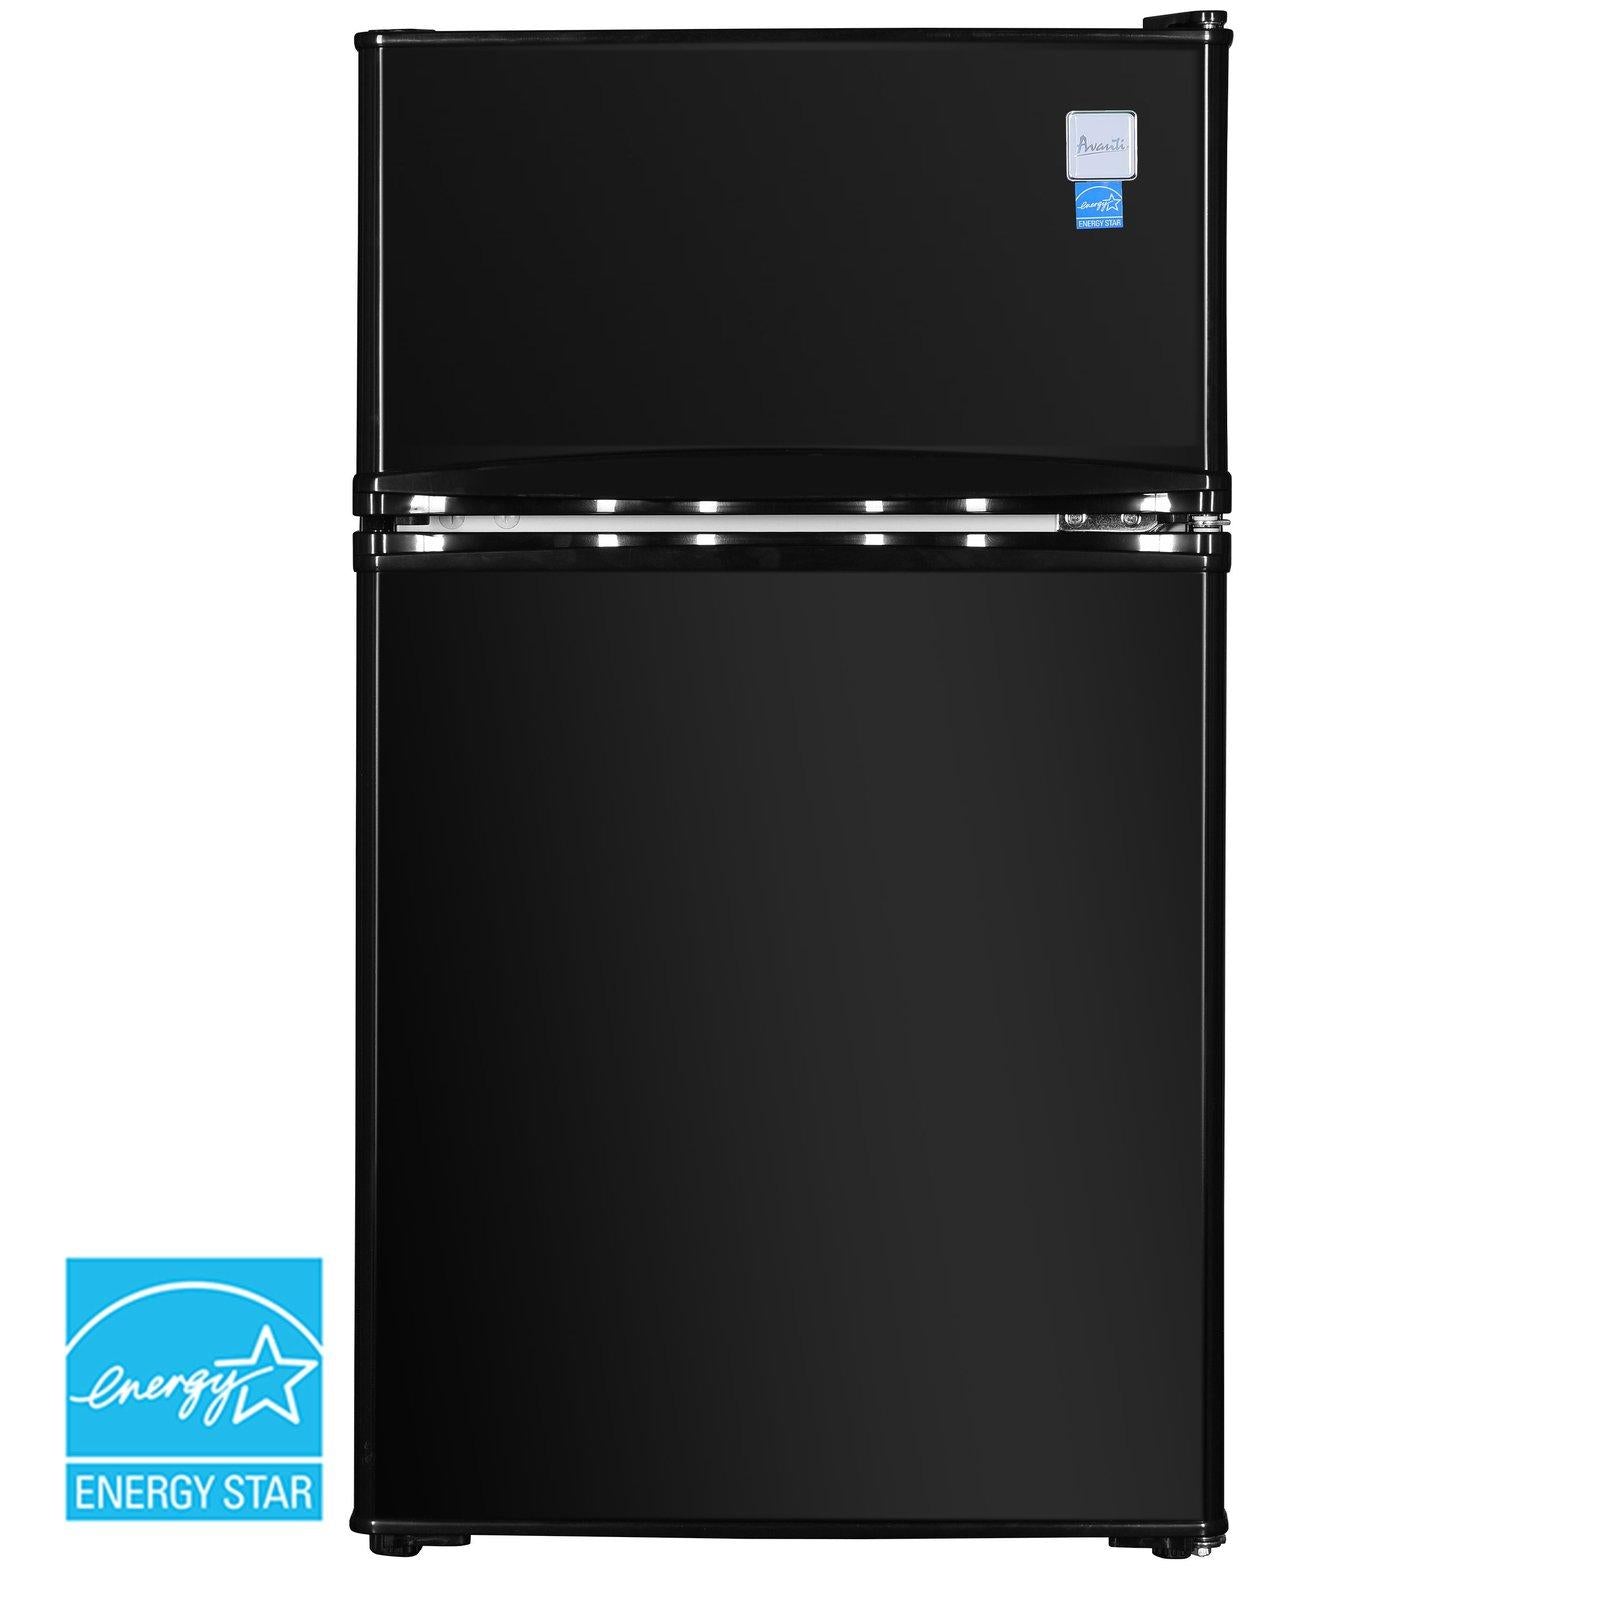 Avanti 3.1 cu. ft. Compact Refrigerator